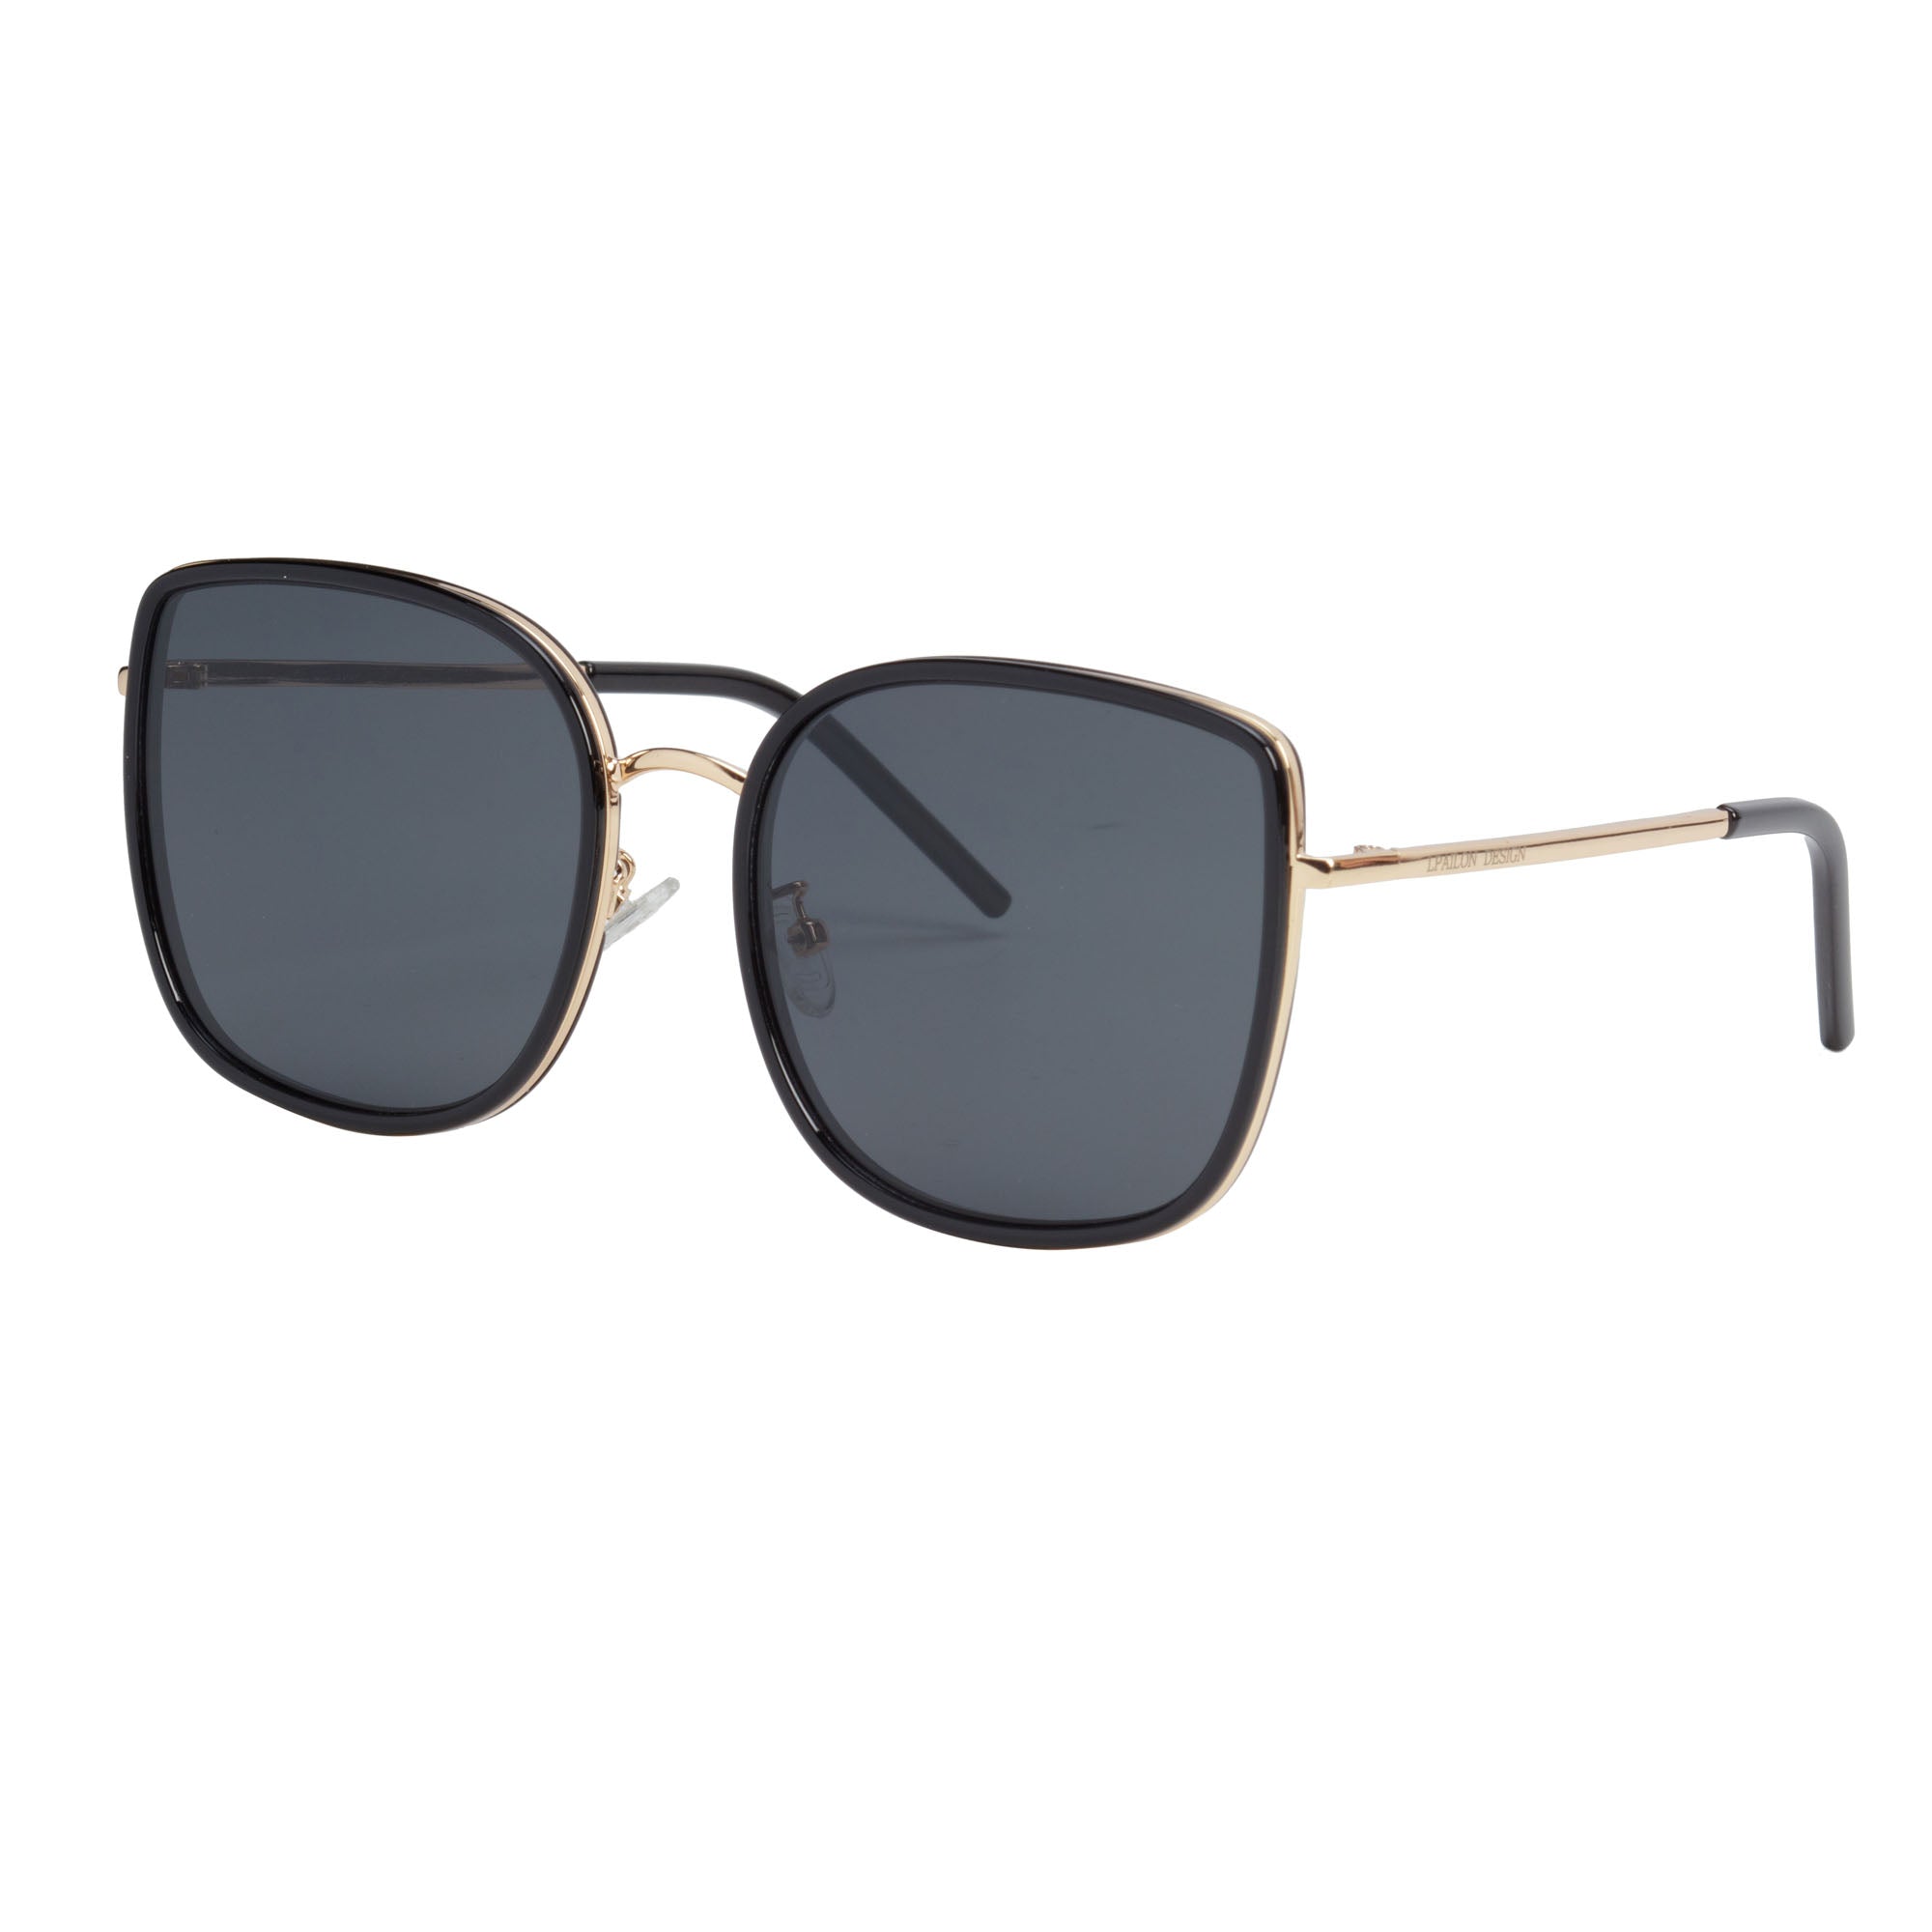 Sunglasses - EBS7009 Portofino